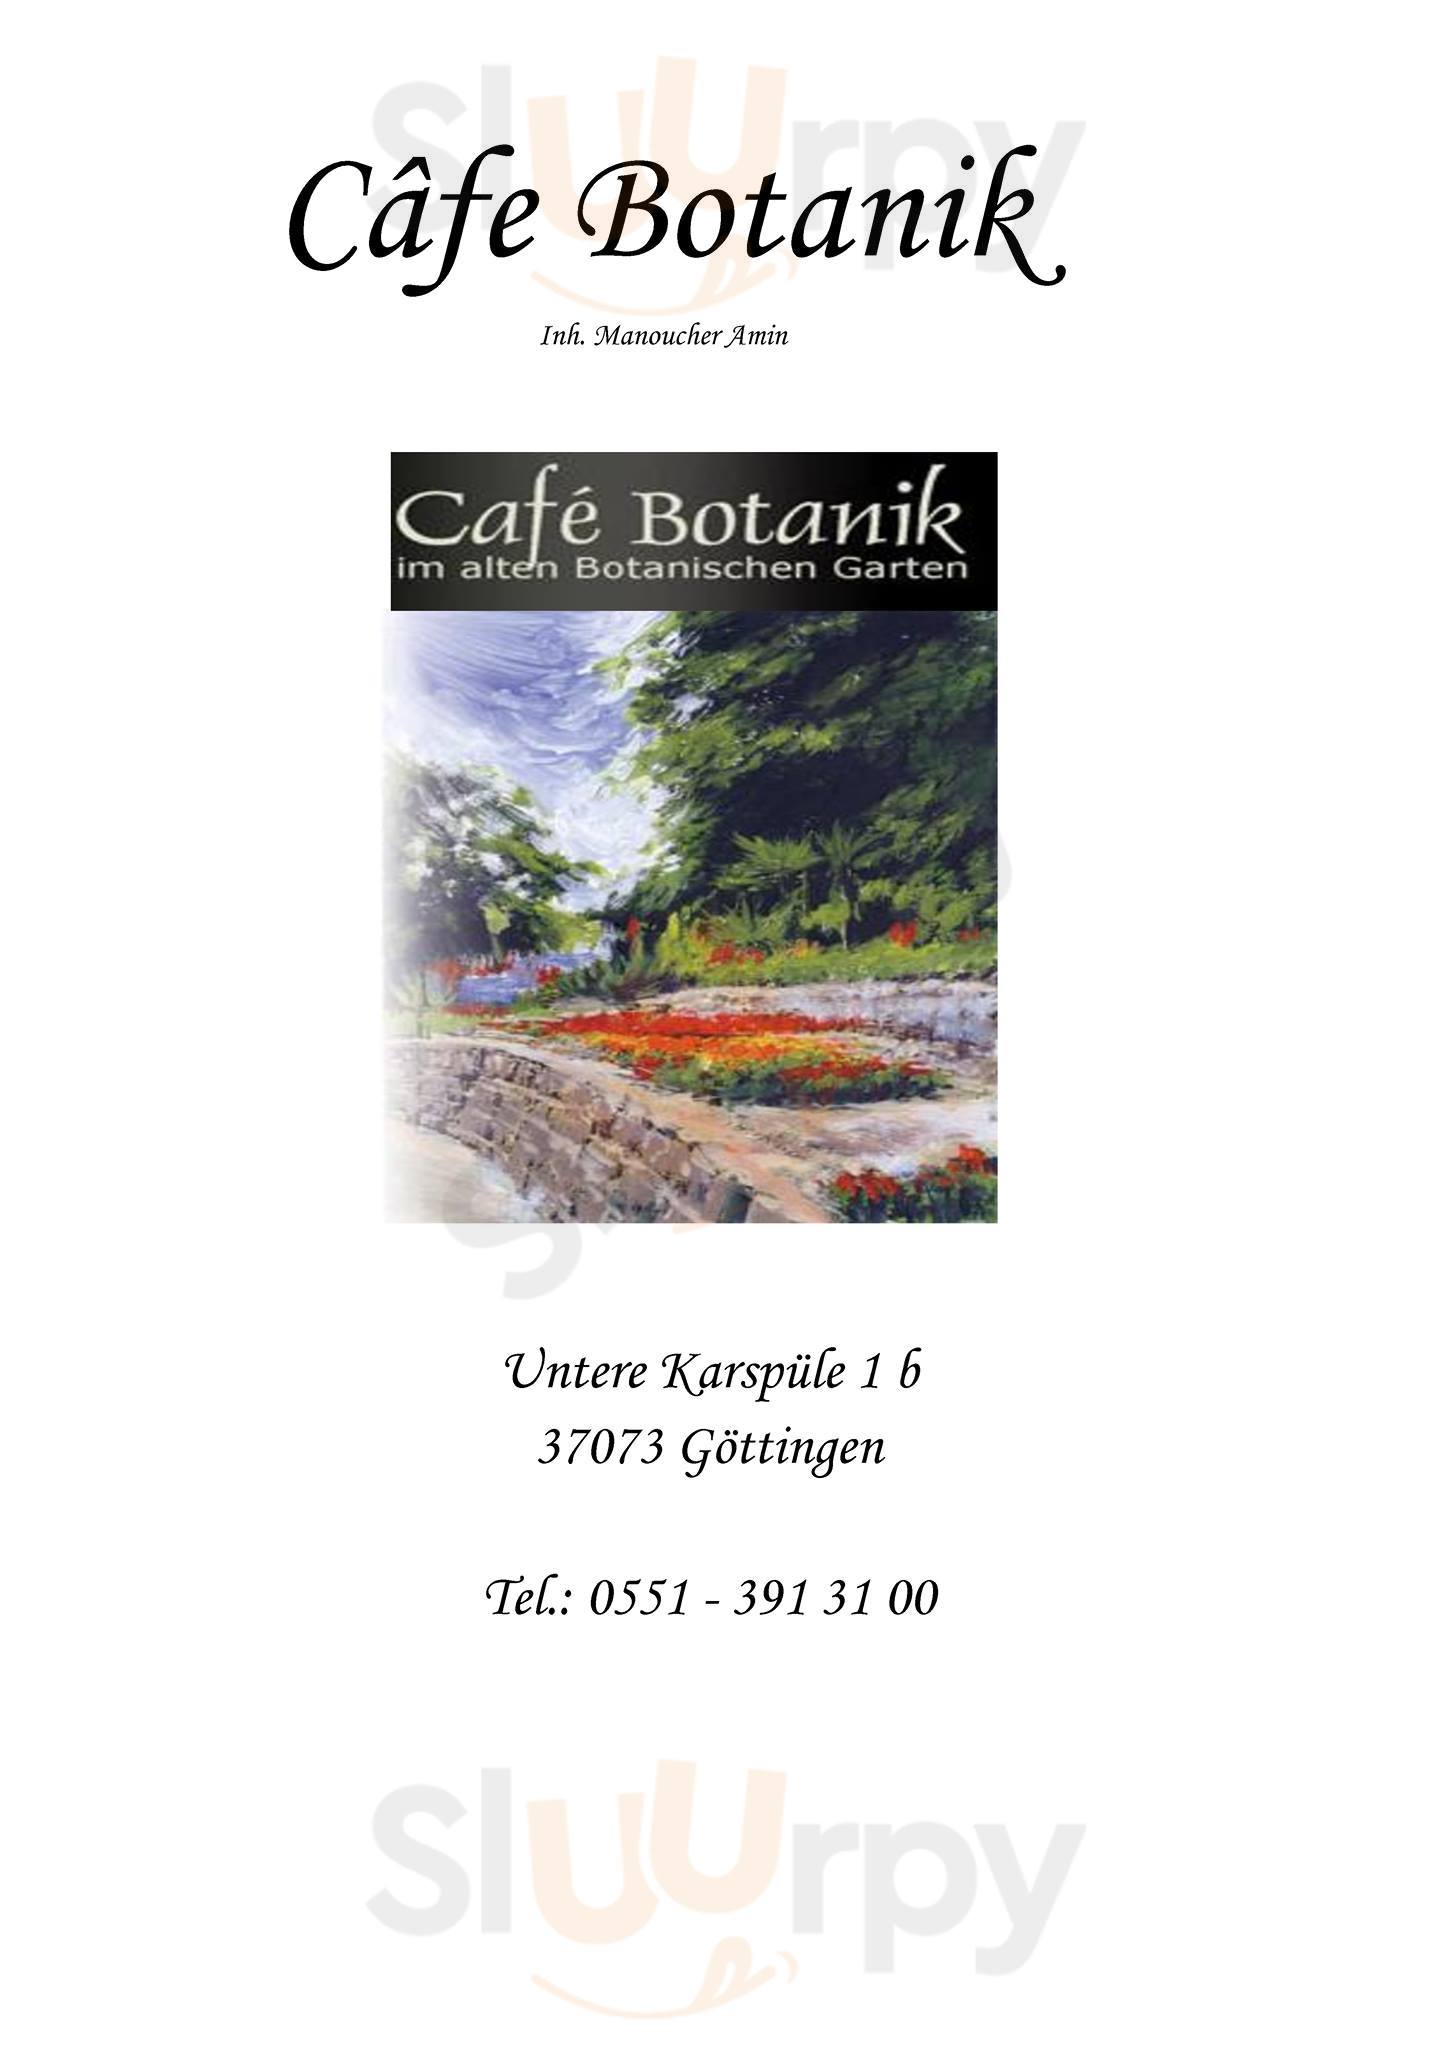 Café Botanik Göttingen Menu - 1